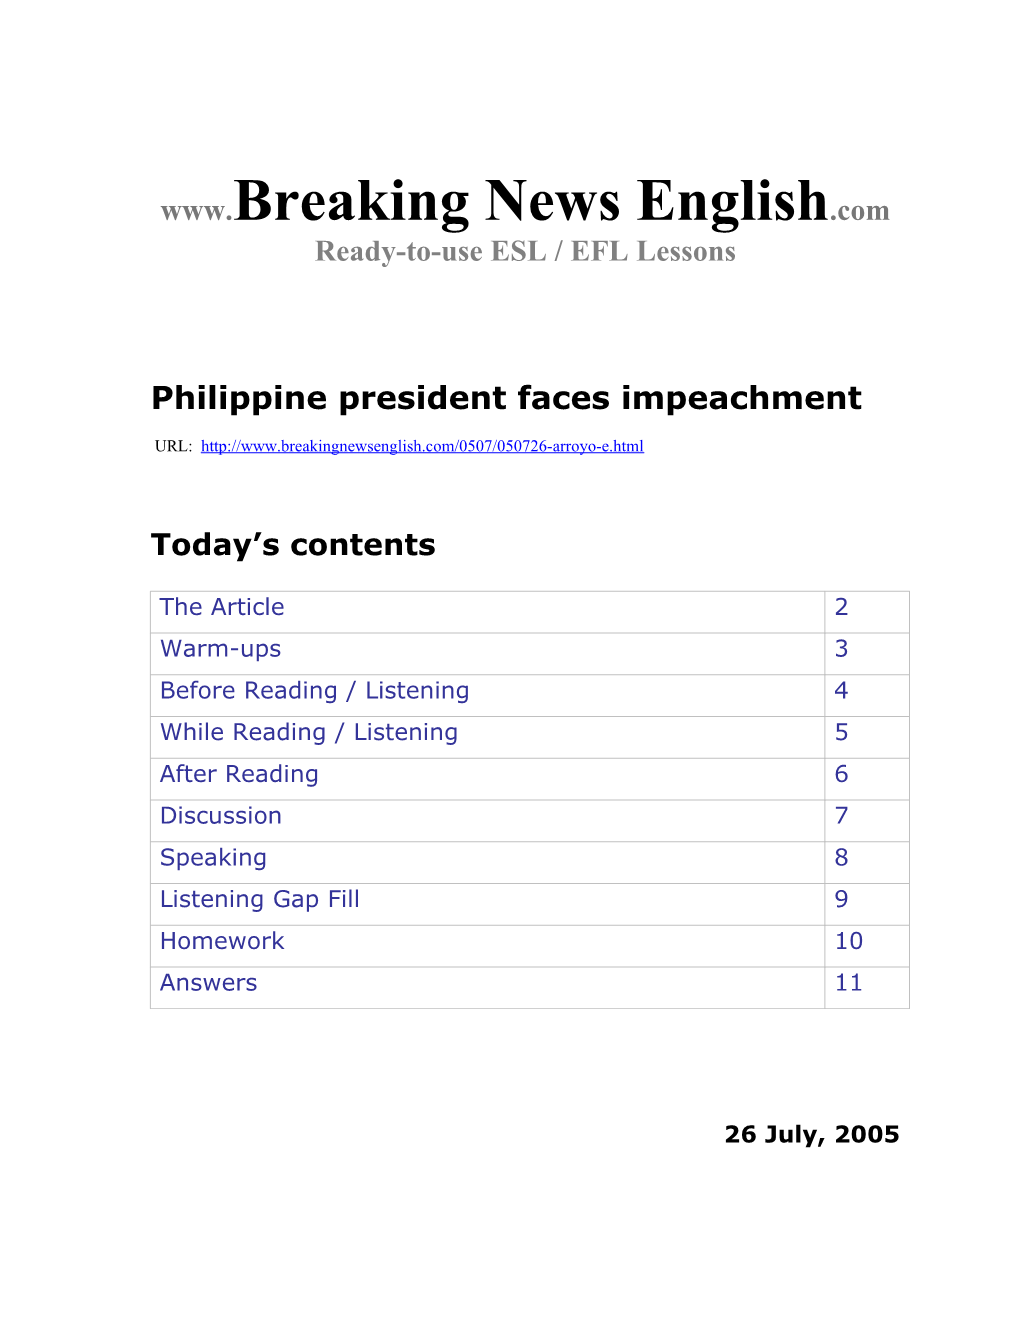 Philippine President Faces Impeachment